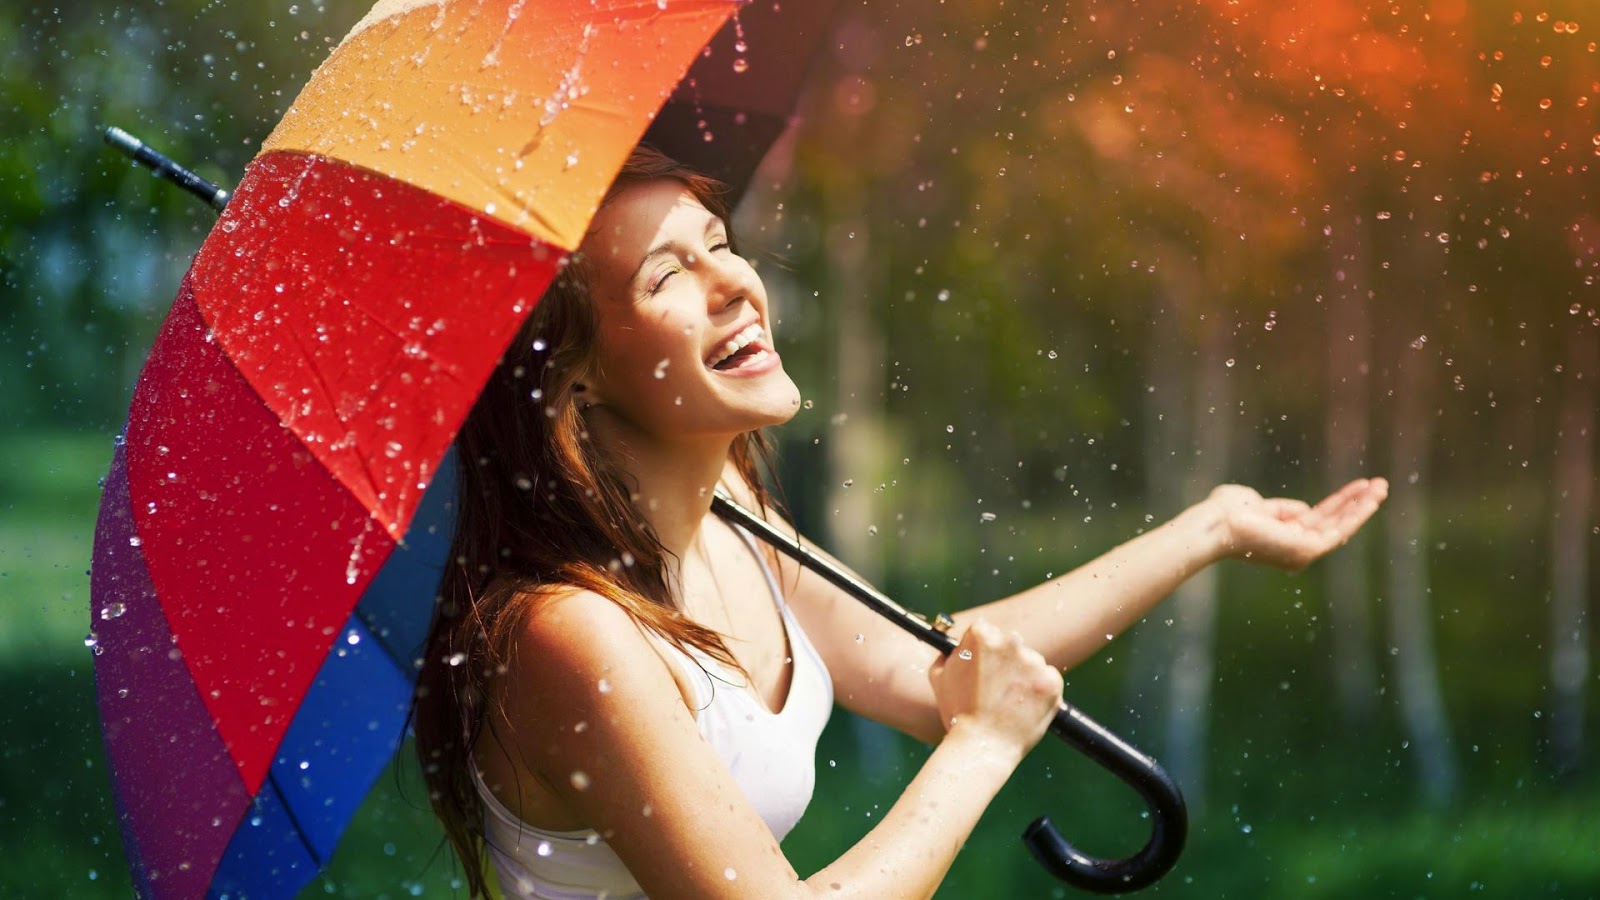 girl in rain wallpaper,people in nature,umbrella,fun,rain,smile